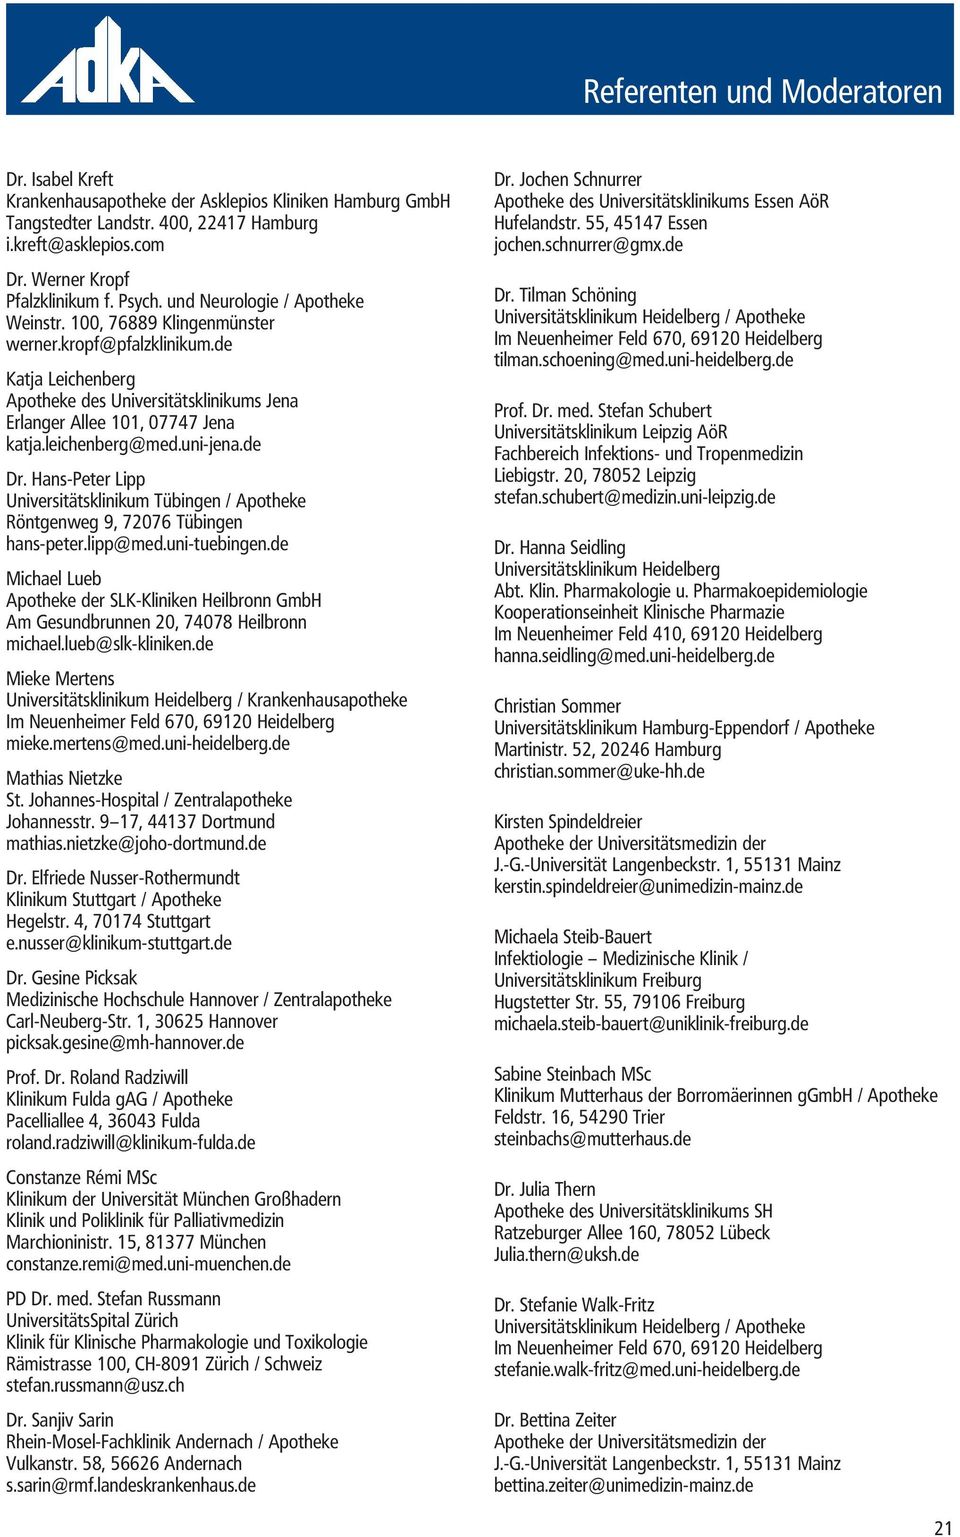 leichenberg@med.uni-jena.de Dr. Hans-Peter Lipp Universitätsklinikum Tübingen / Apotheke Röntgenweg 9, 72076 Tübingen hans-peter.lipp@med.uni-tuebingen.